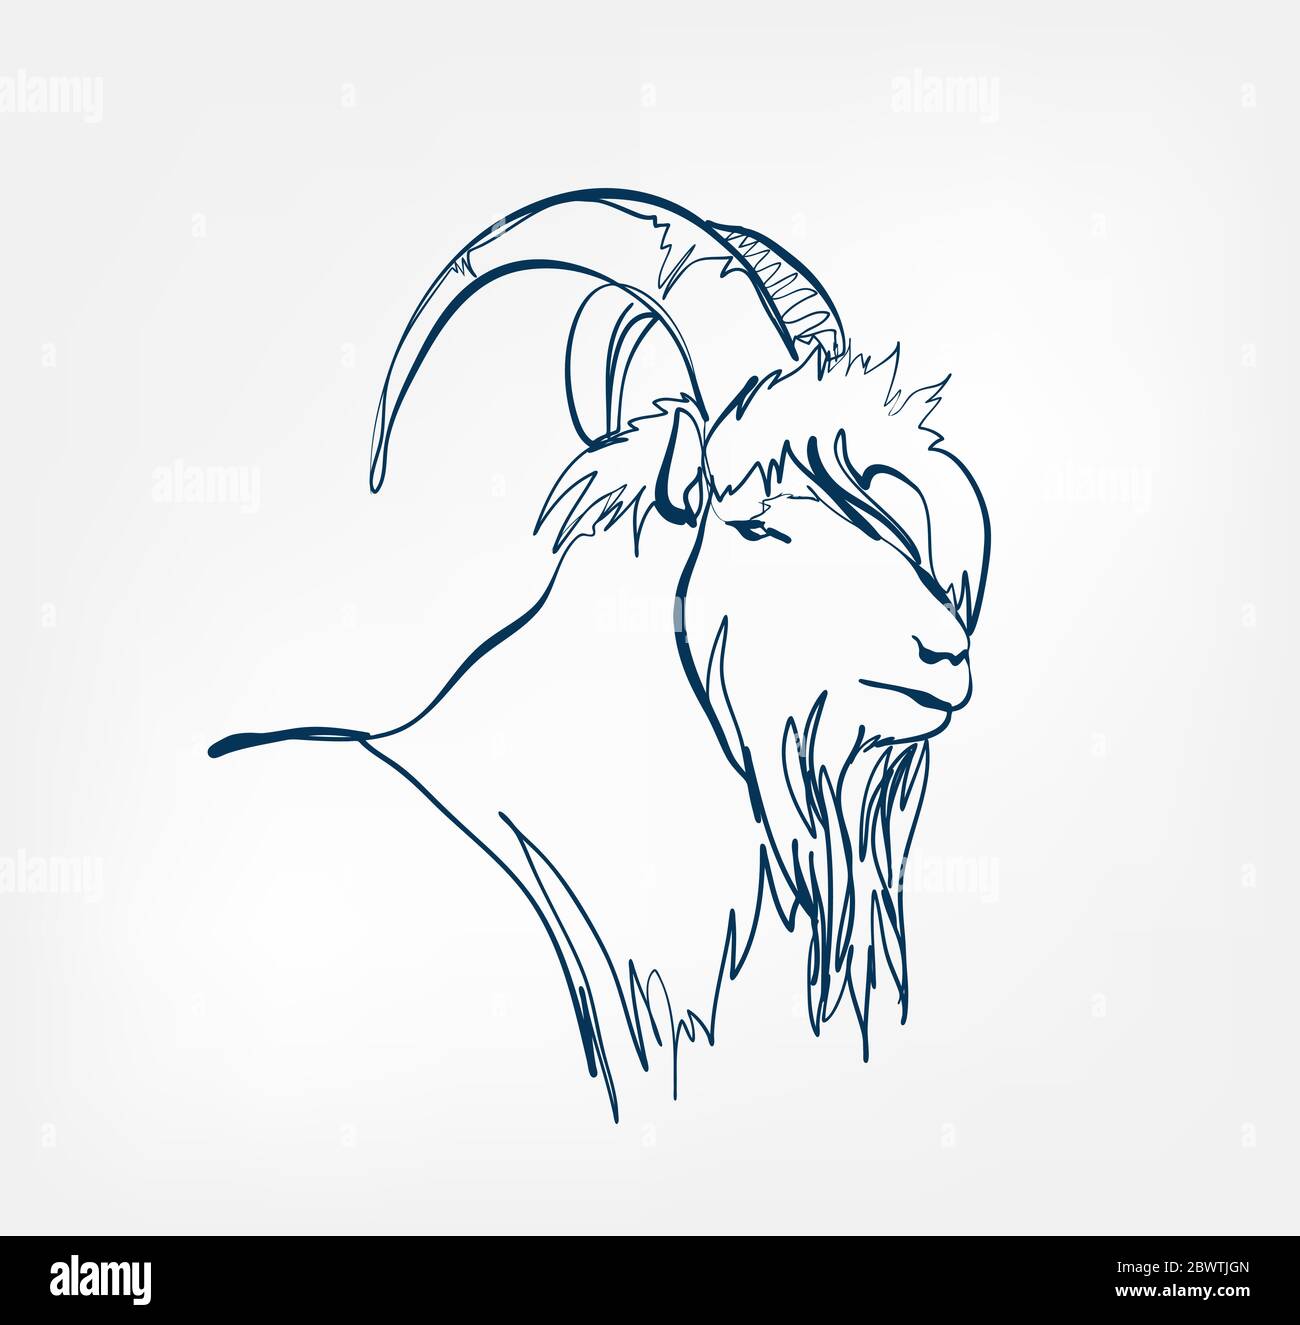 Goathead “Burn-In” Background Wallpaper : r/sabres